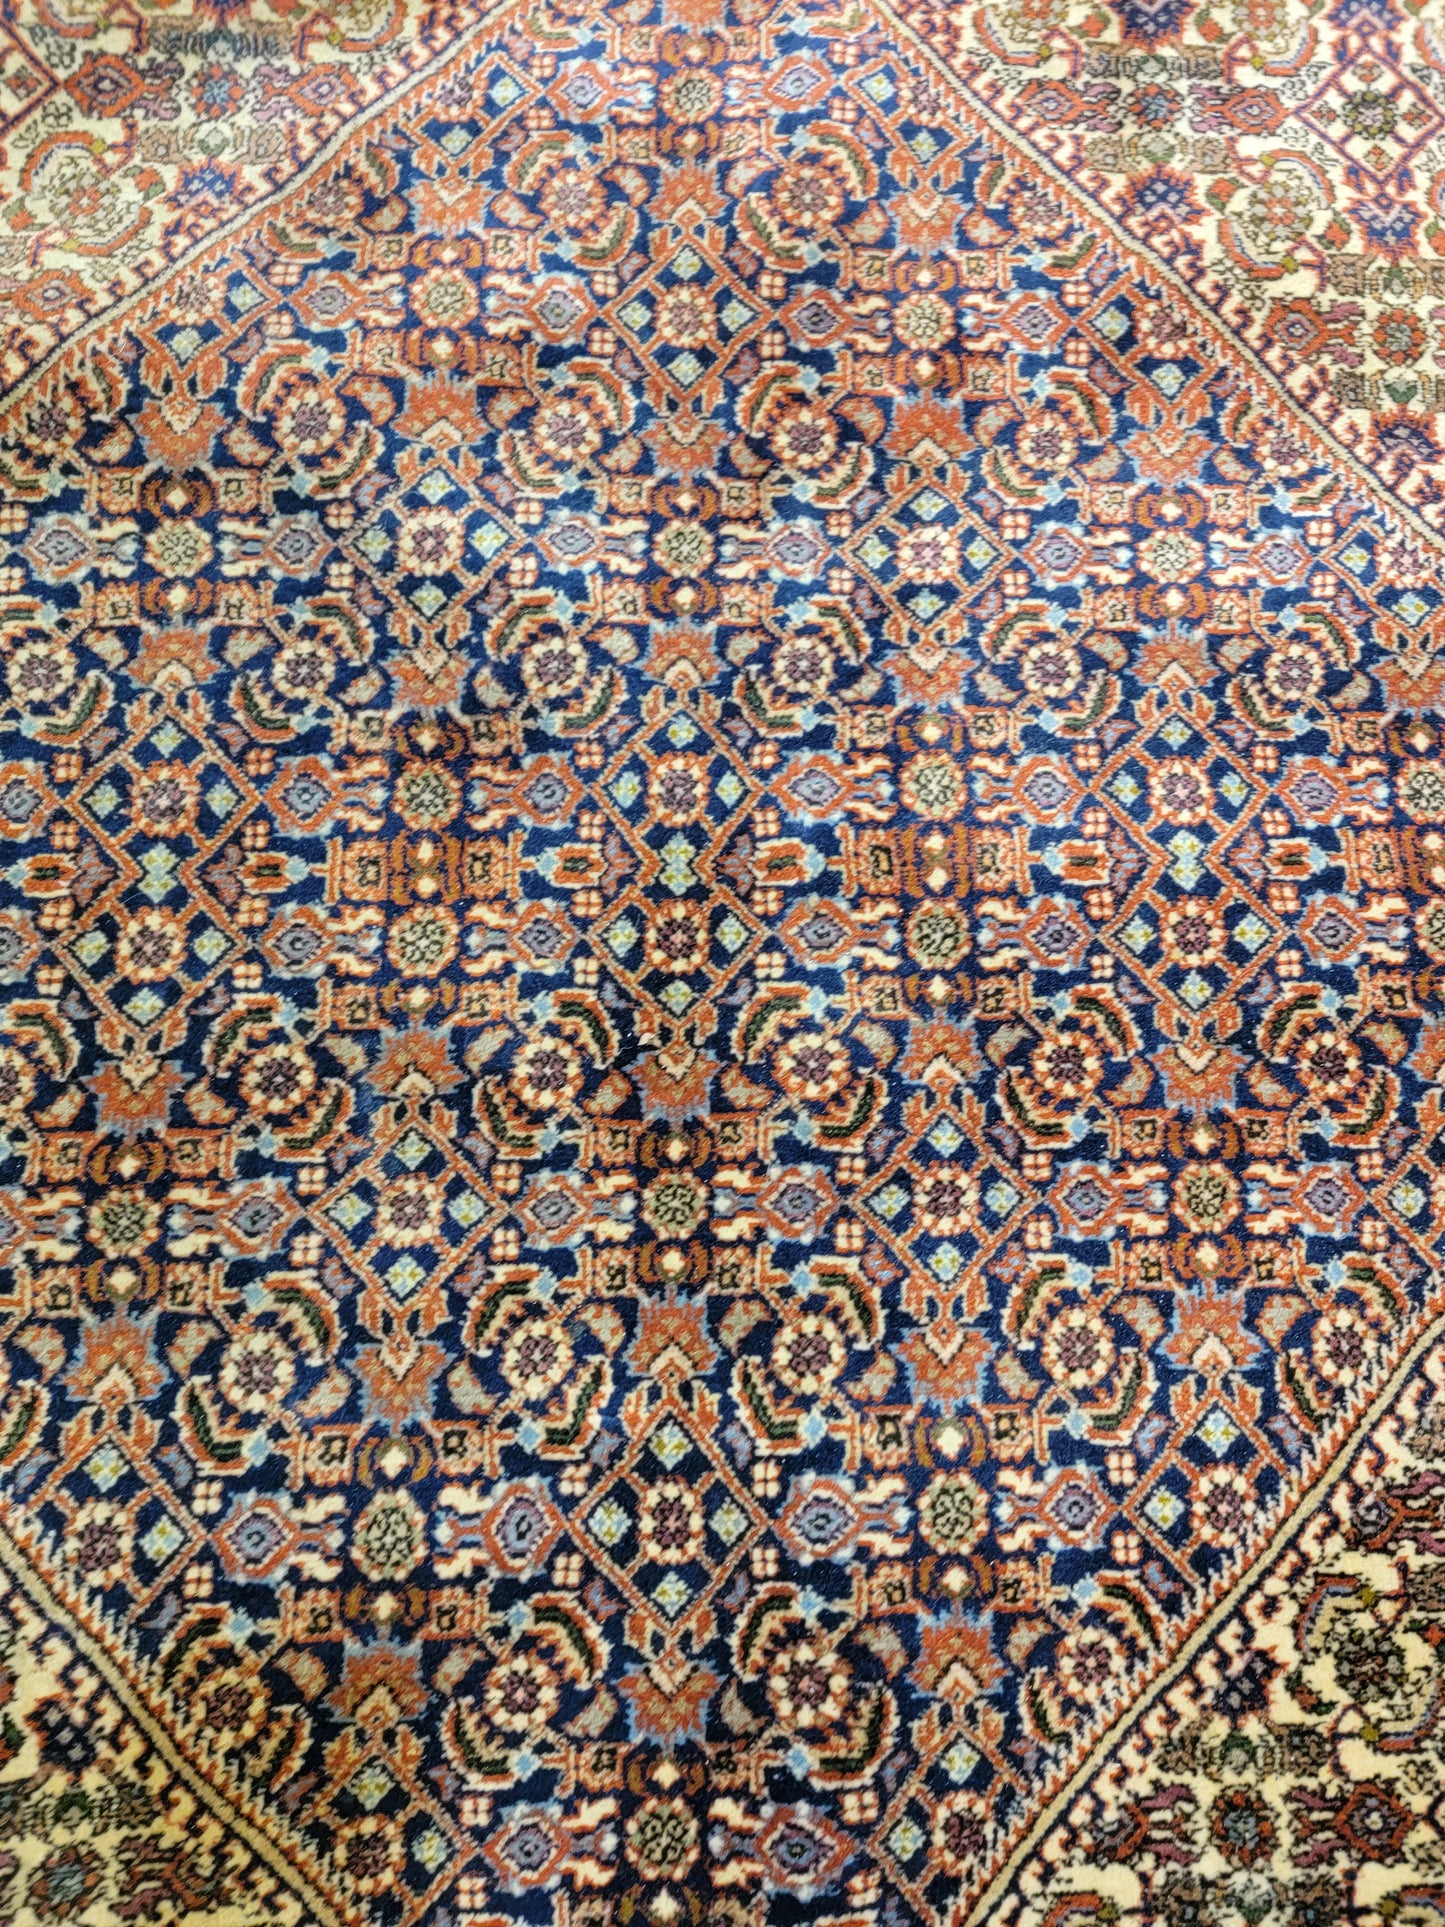 Antique Hand-Knotted Wool Area Rug Bijar Mahi 9'8" x 13'